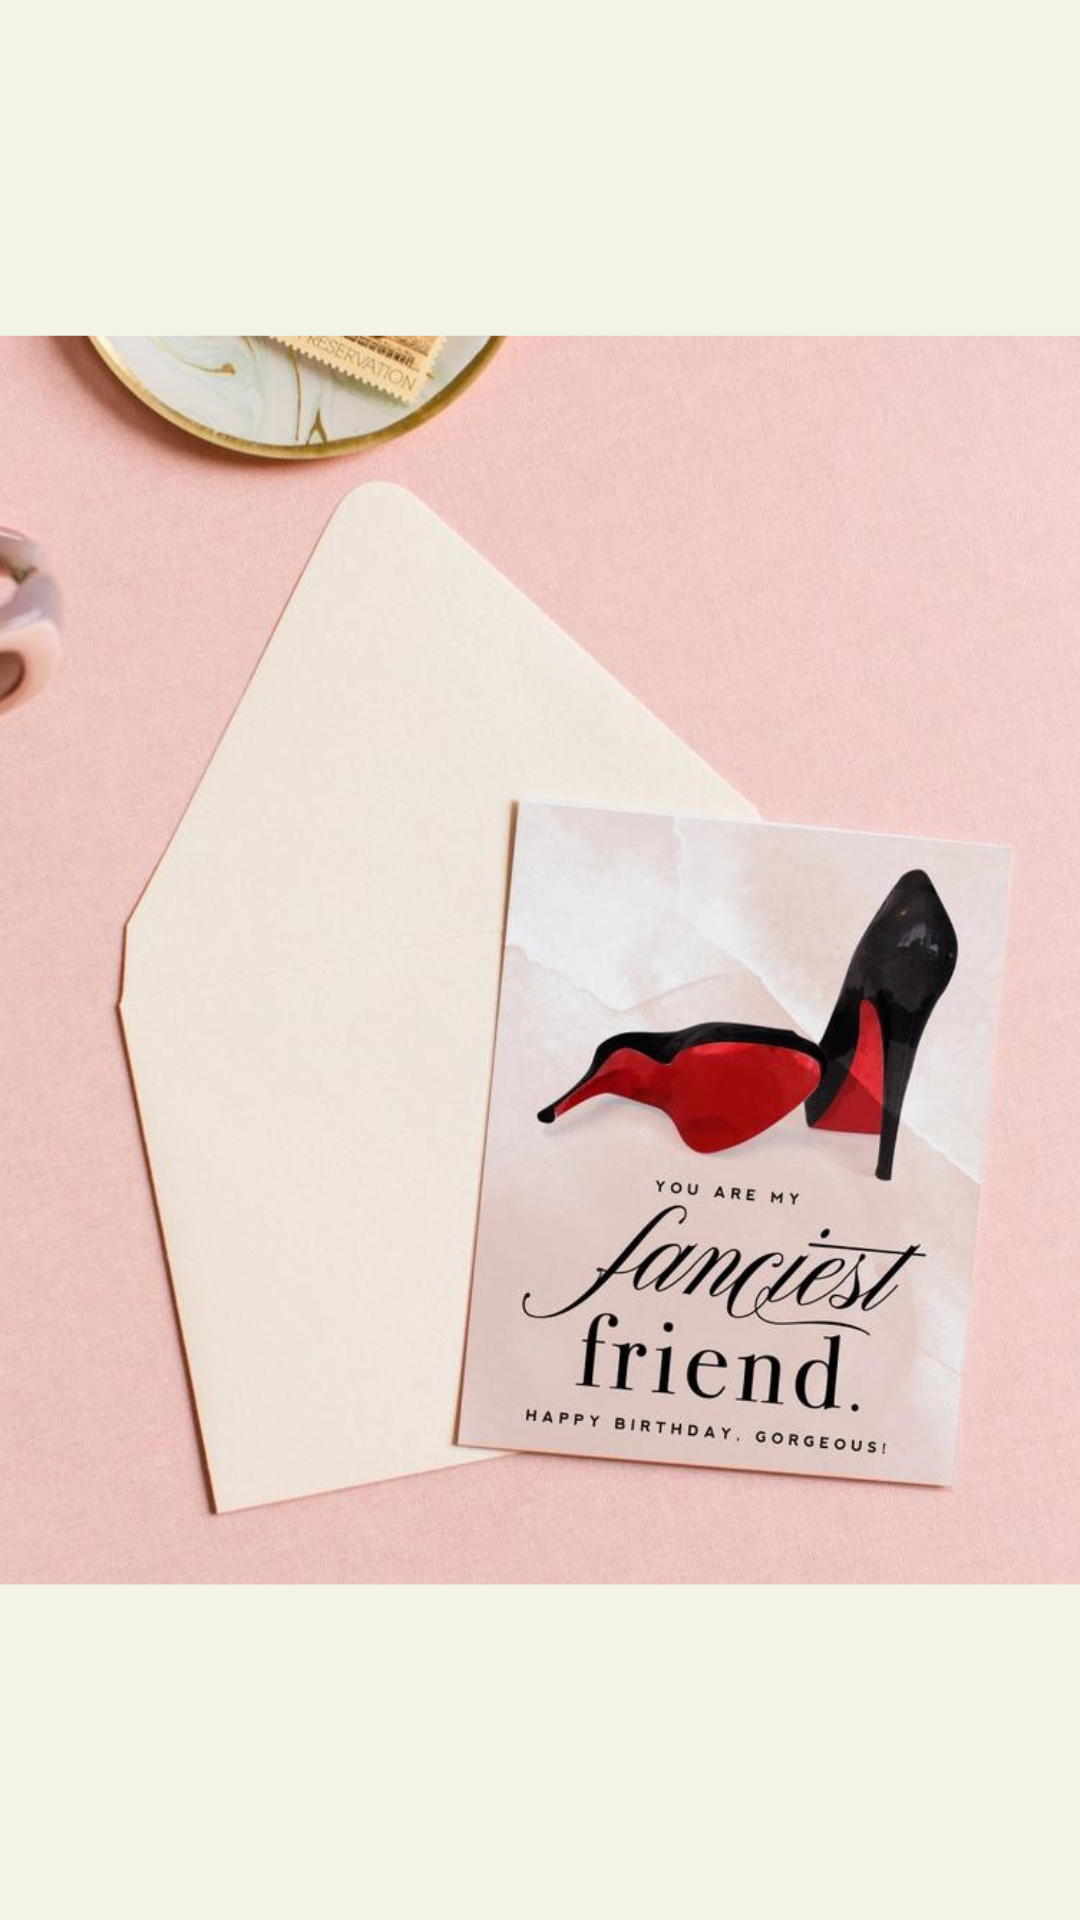 Fanciest Friend Birthday Greeting Card - Red Bottom Heels